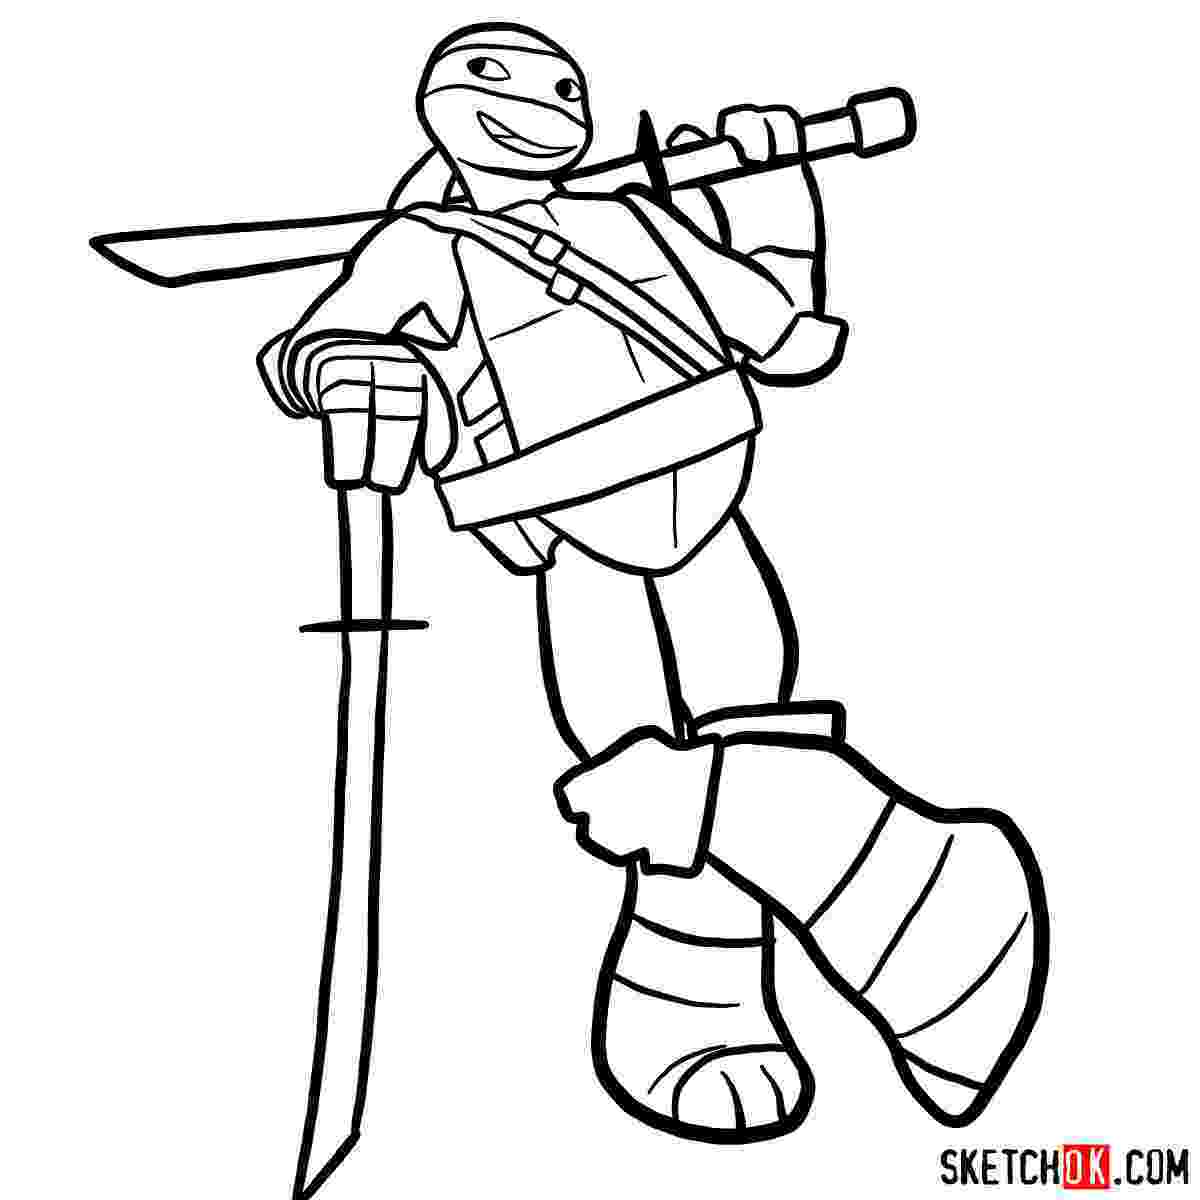 leonardo pictures tmnt how to draw leonardo ninja turtle cartoon style tmnt leonardo pictures tmnt 